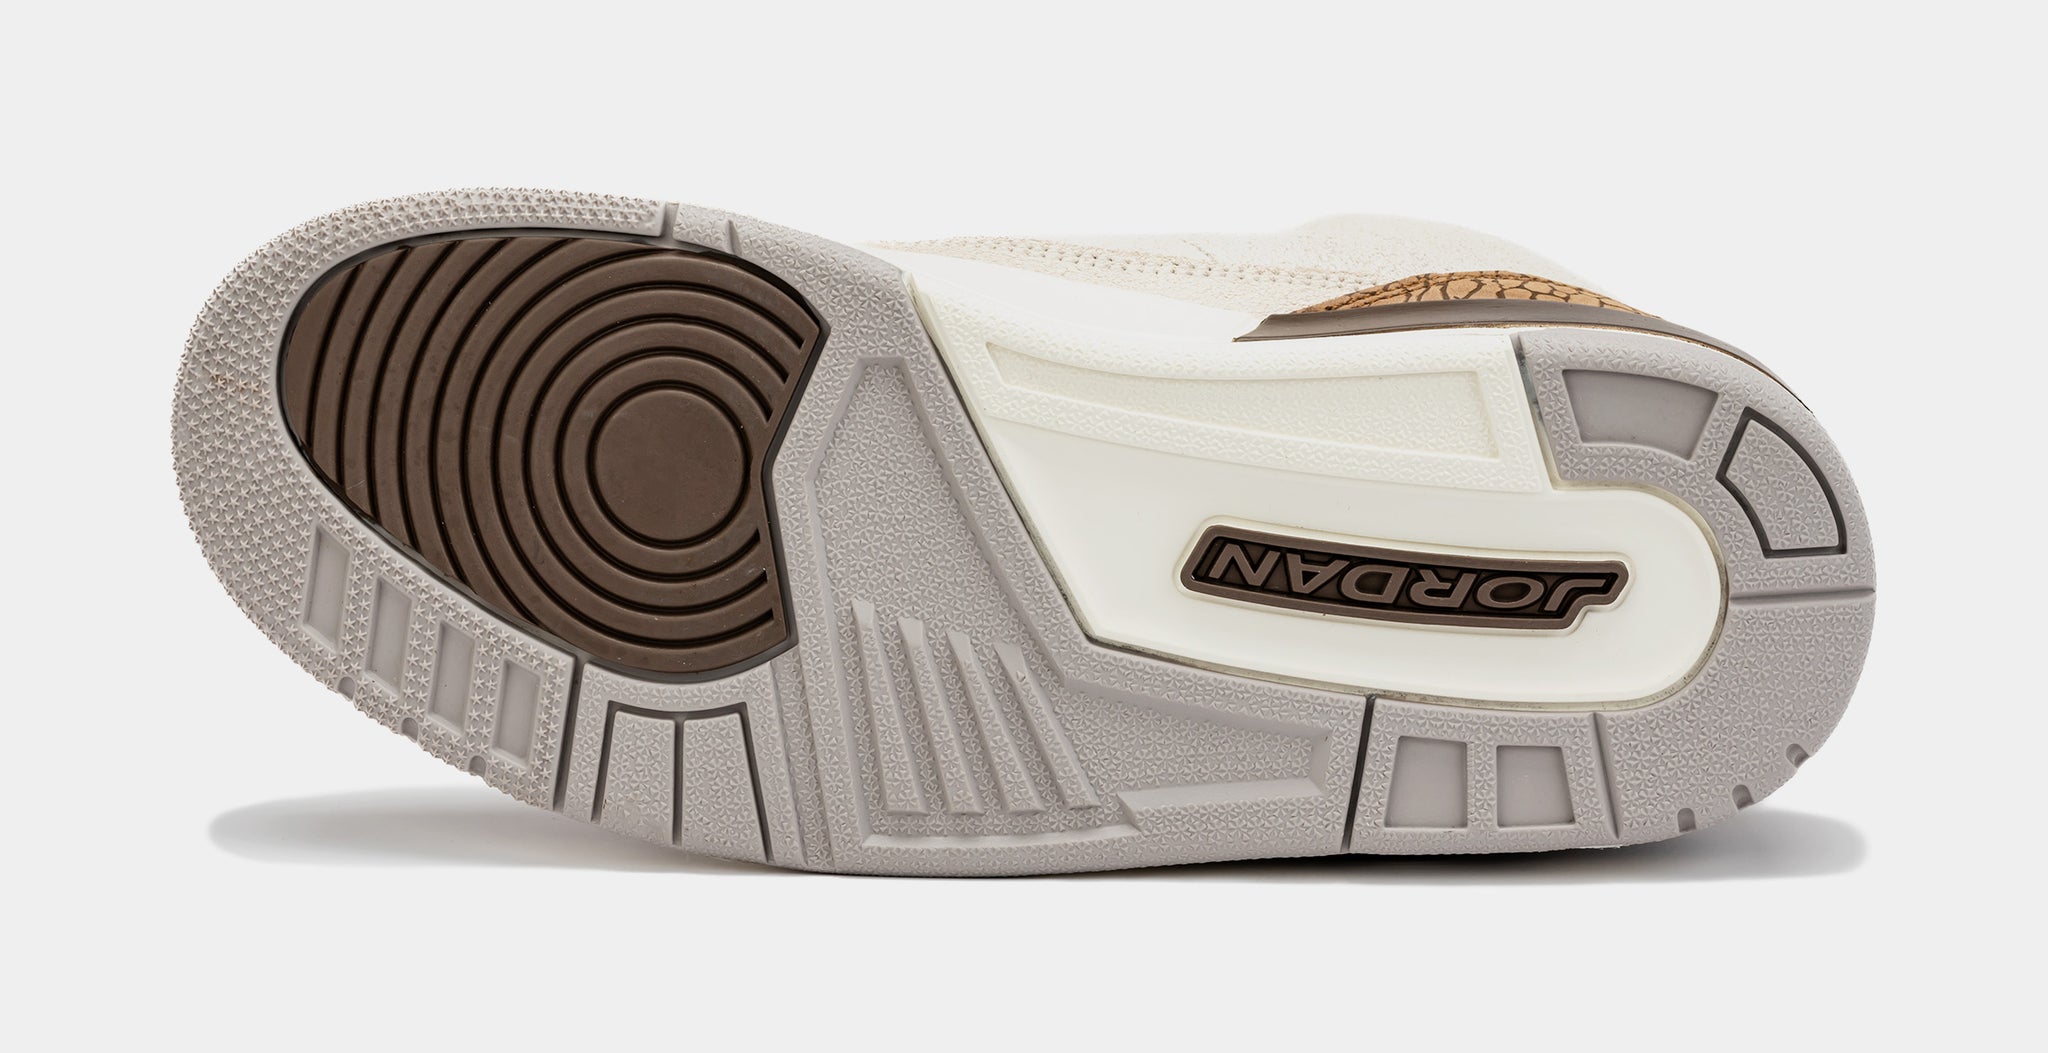 Air Jordan 3 'Orewood Brown' (CT8532-102) Release Date. Nike SNKRS